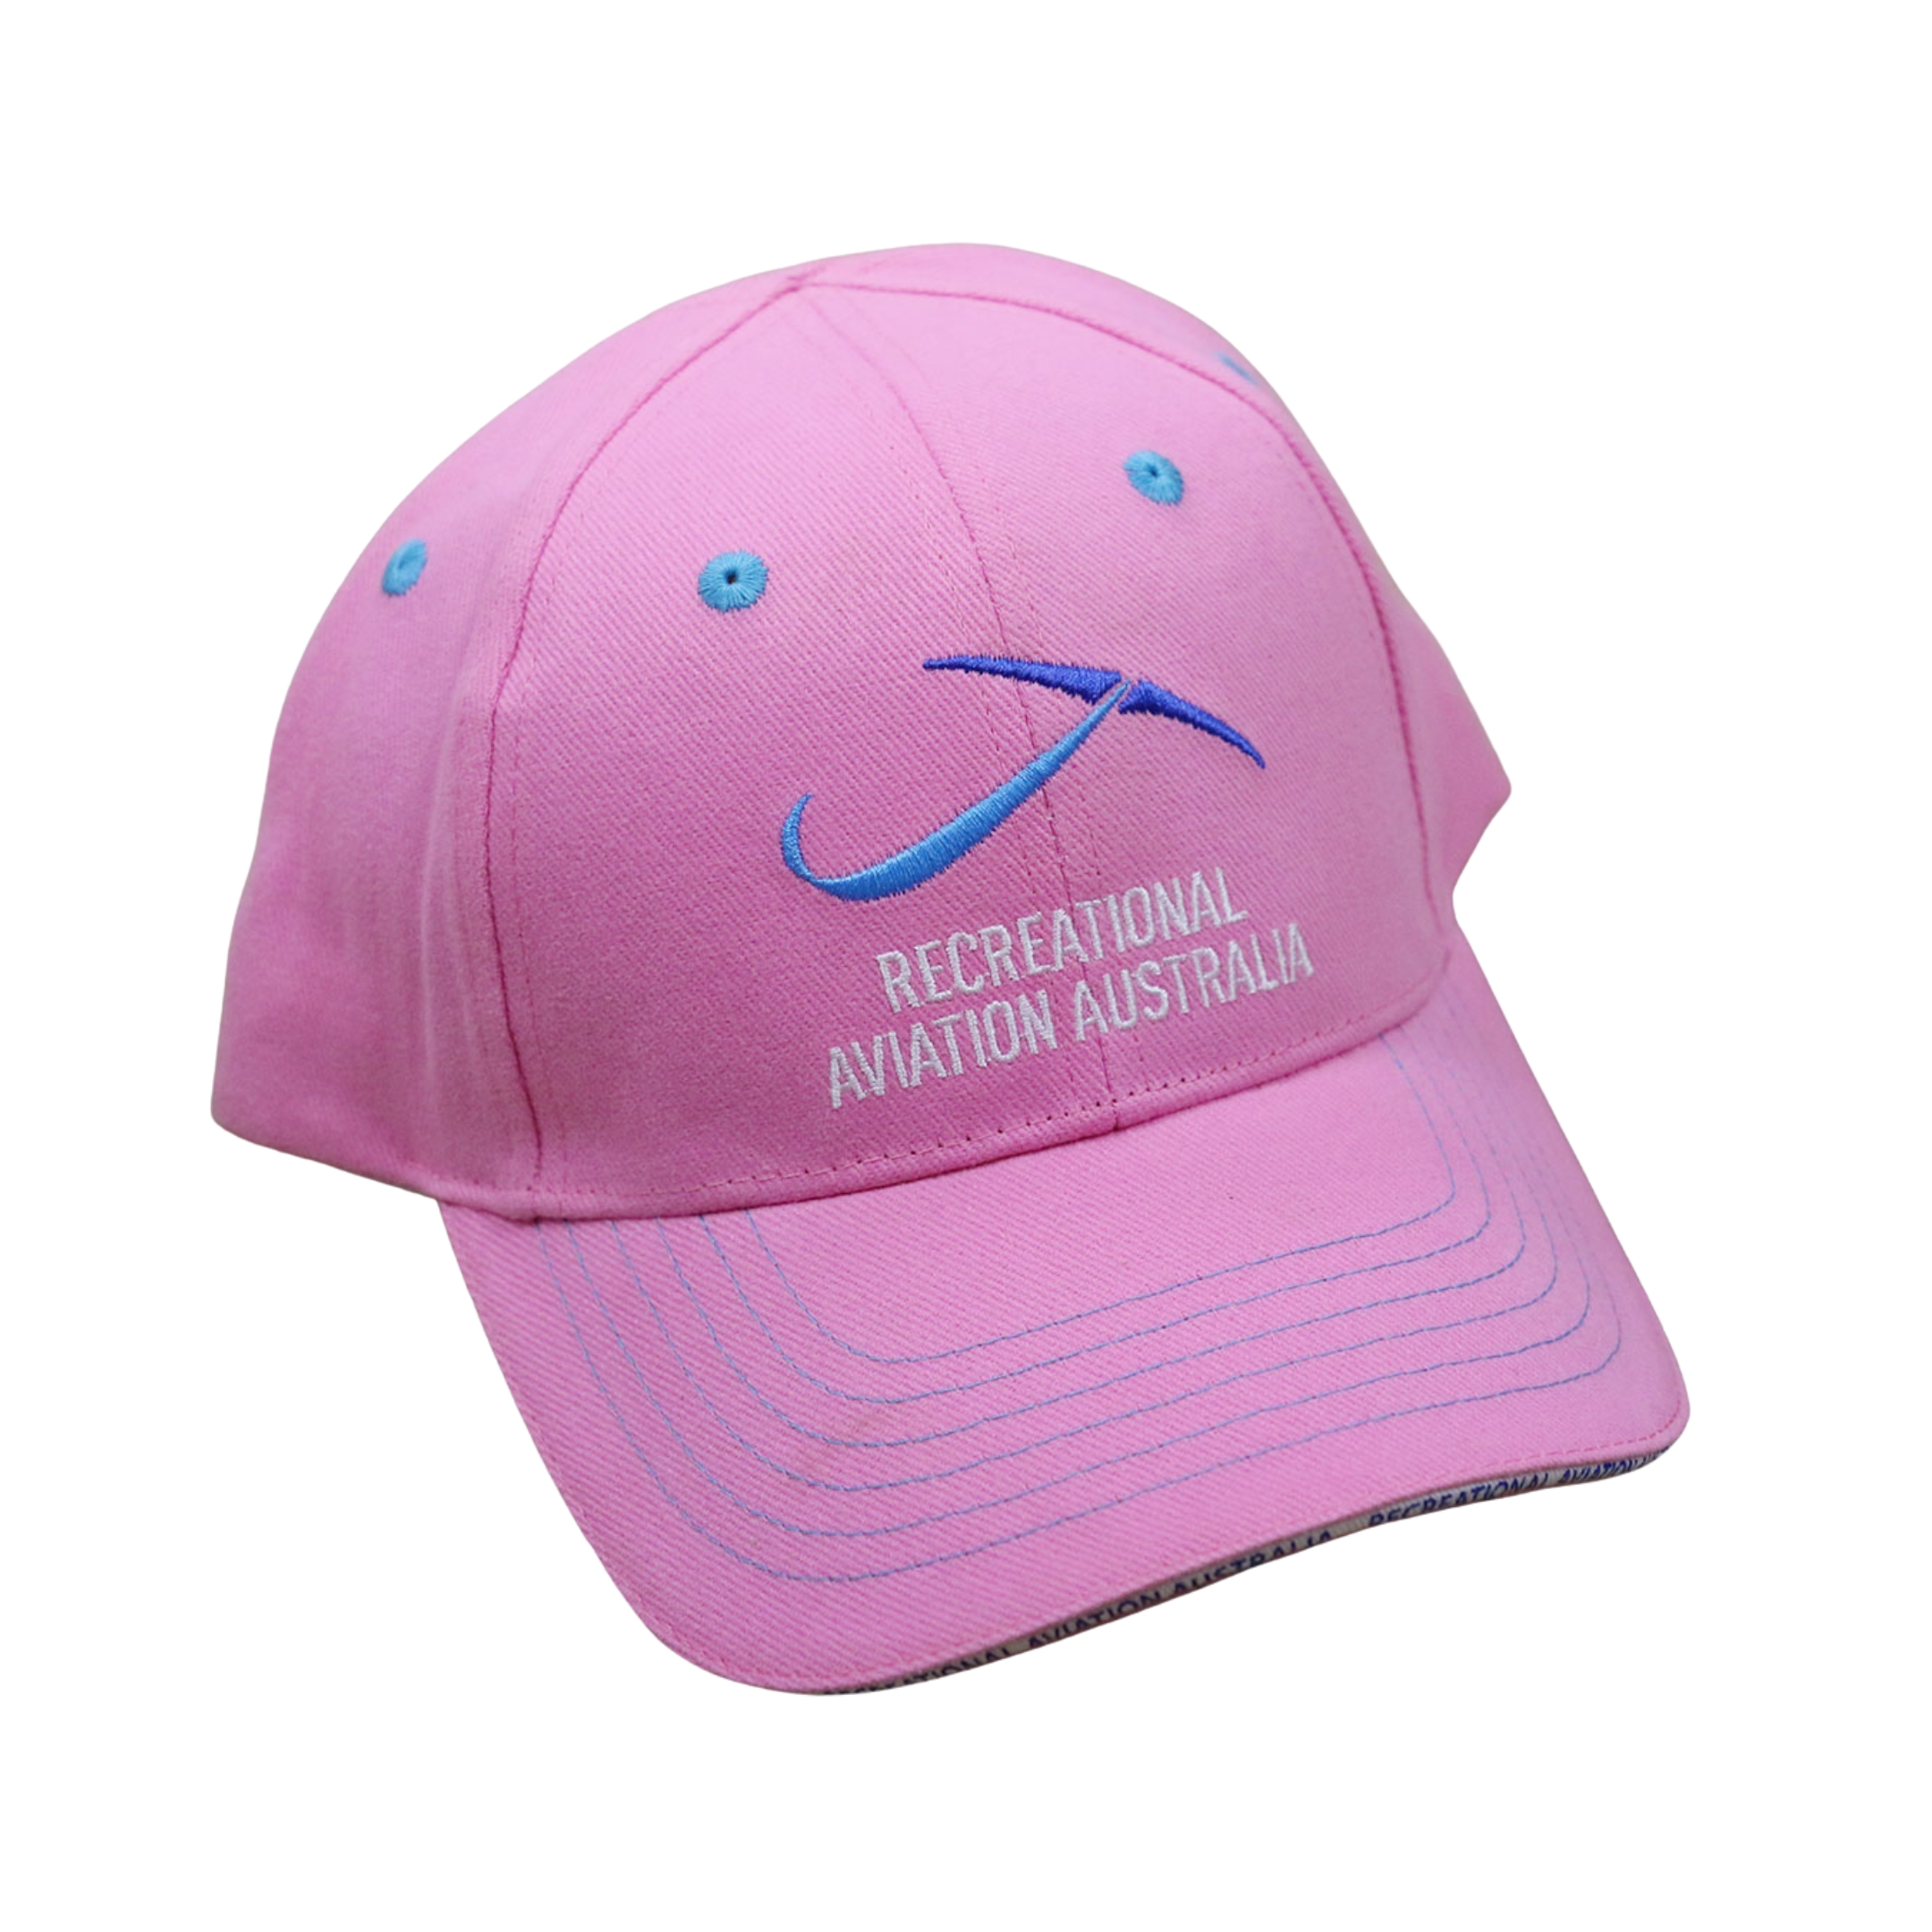 https://raaus.com.au/wp-content/uploads/2023/04/Pink-hat.jpg